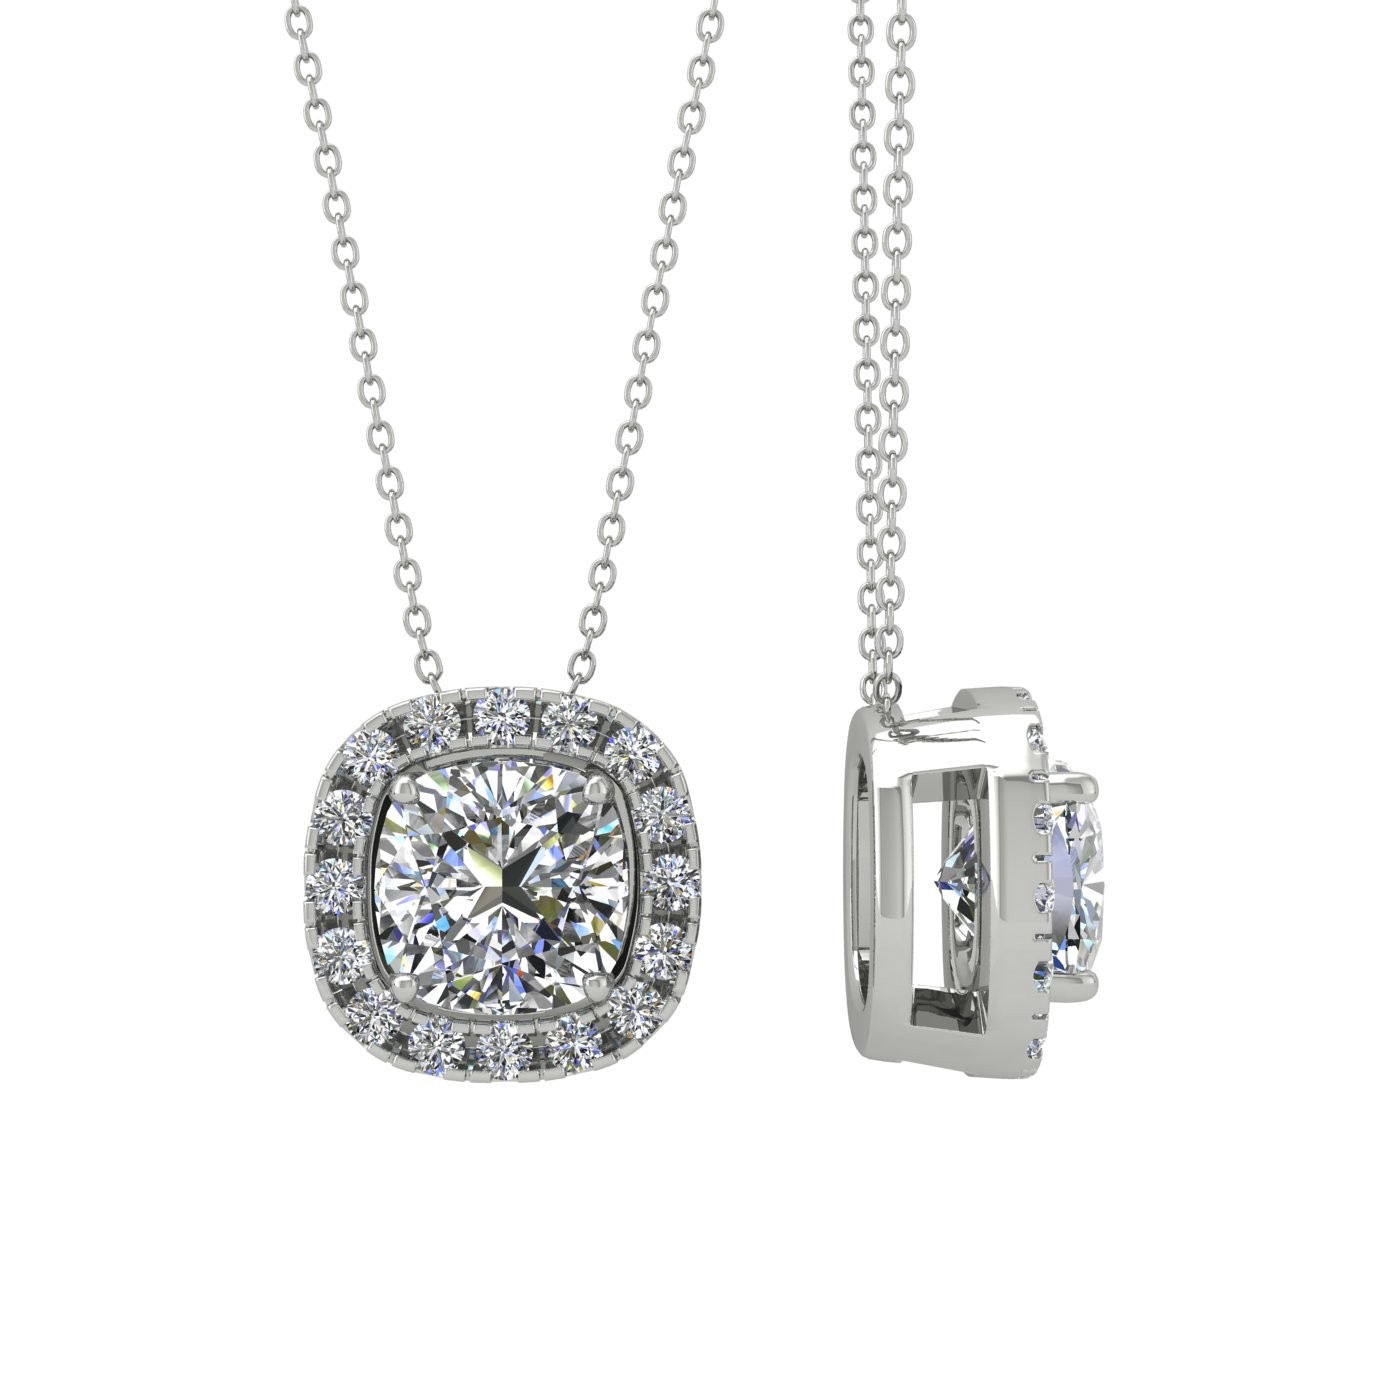 18k white gold 0,3 ct 4 prongs cushion shape diamond pendant with diamond pavÉ set halo Photos & images